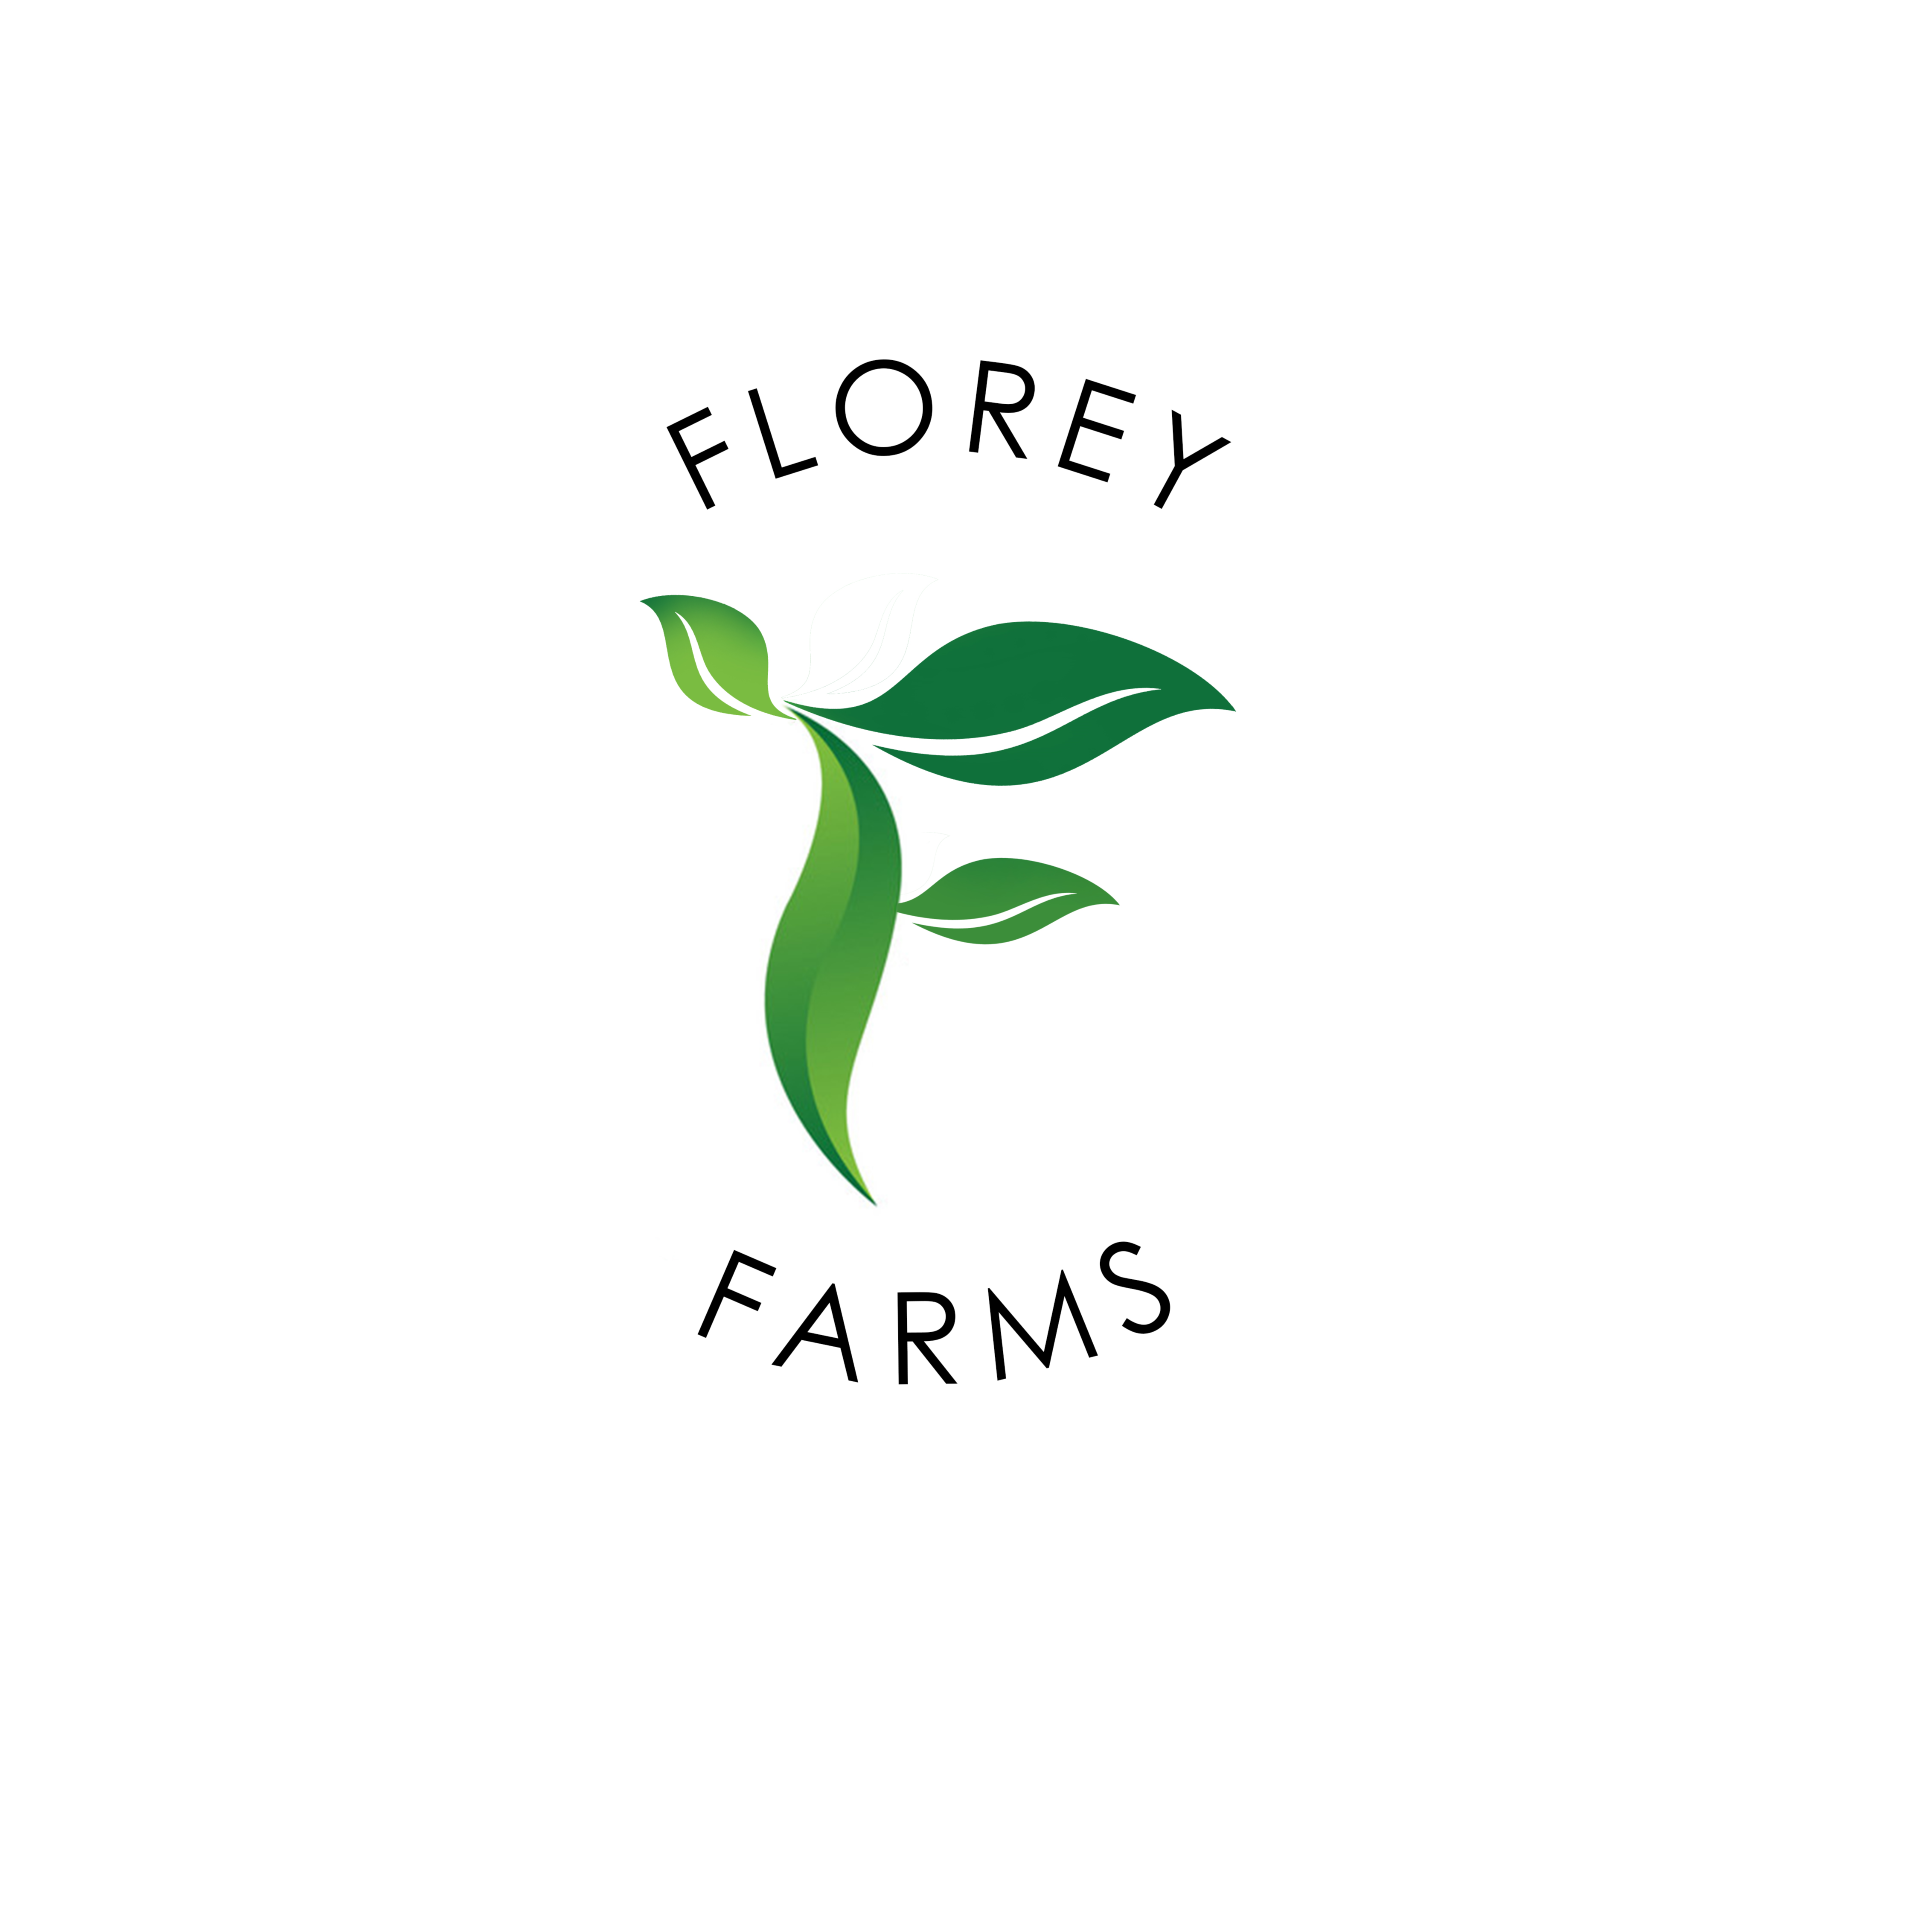 Florey Farms